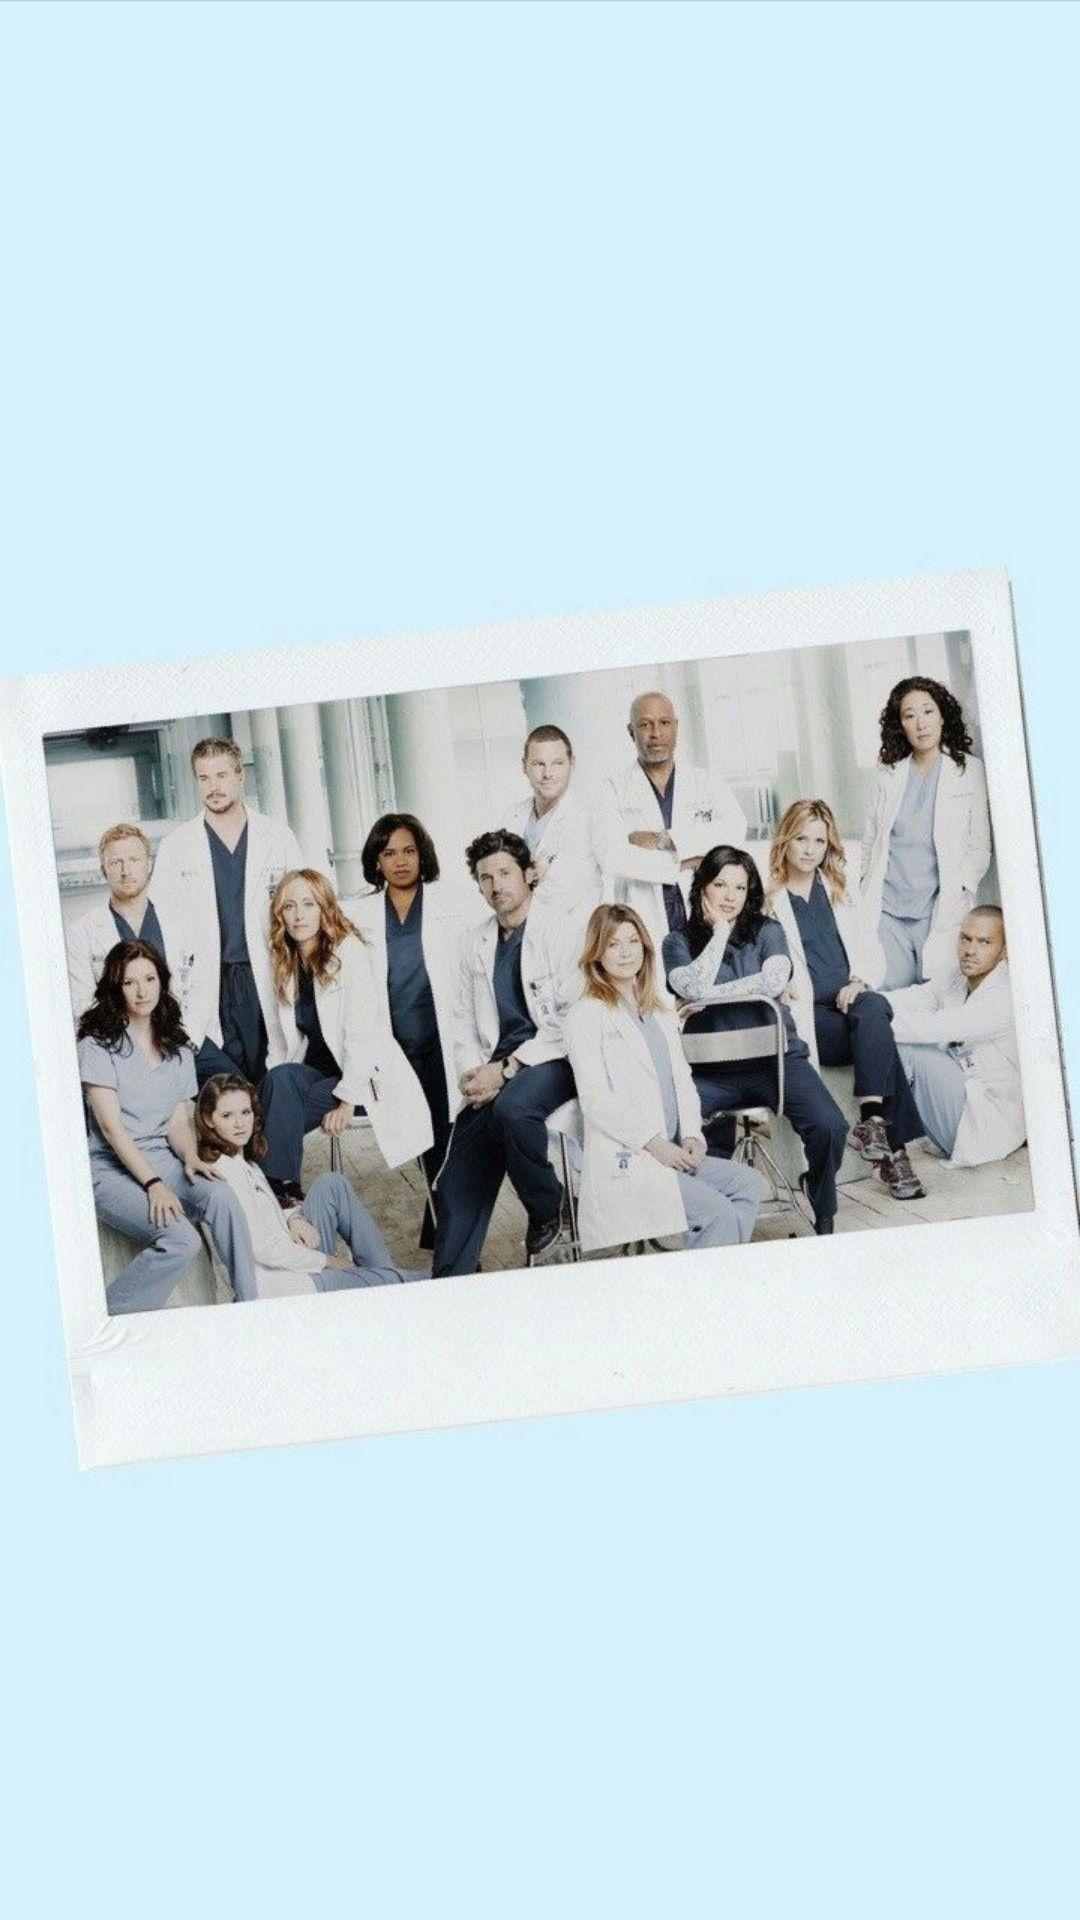 Grey's Anatomy iPhone Wallpapers - Top Free Grey's Anatomy iPhone ...